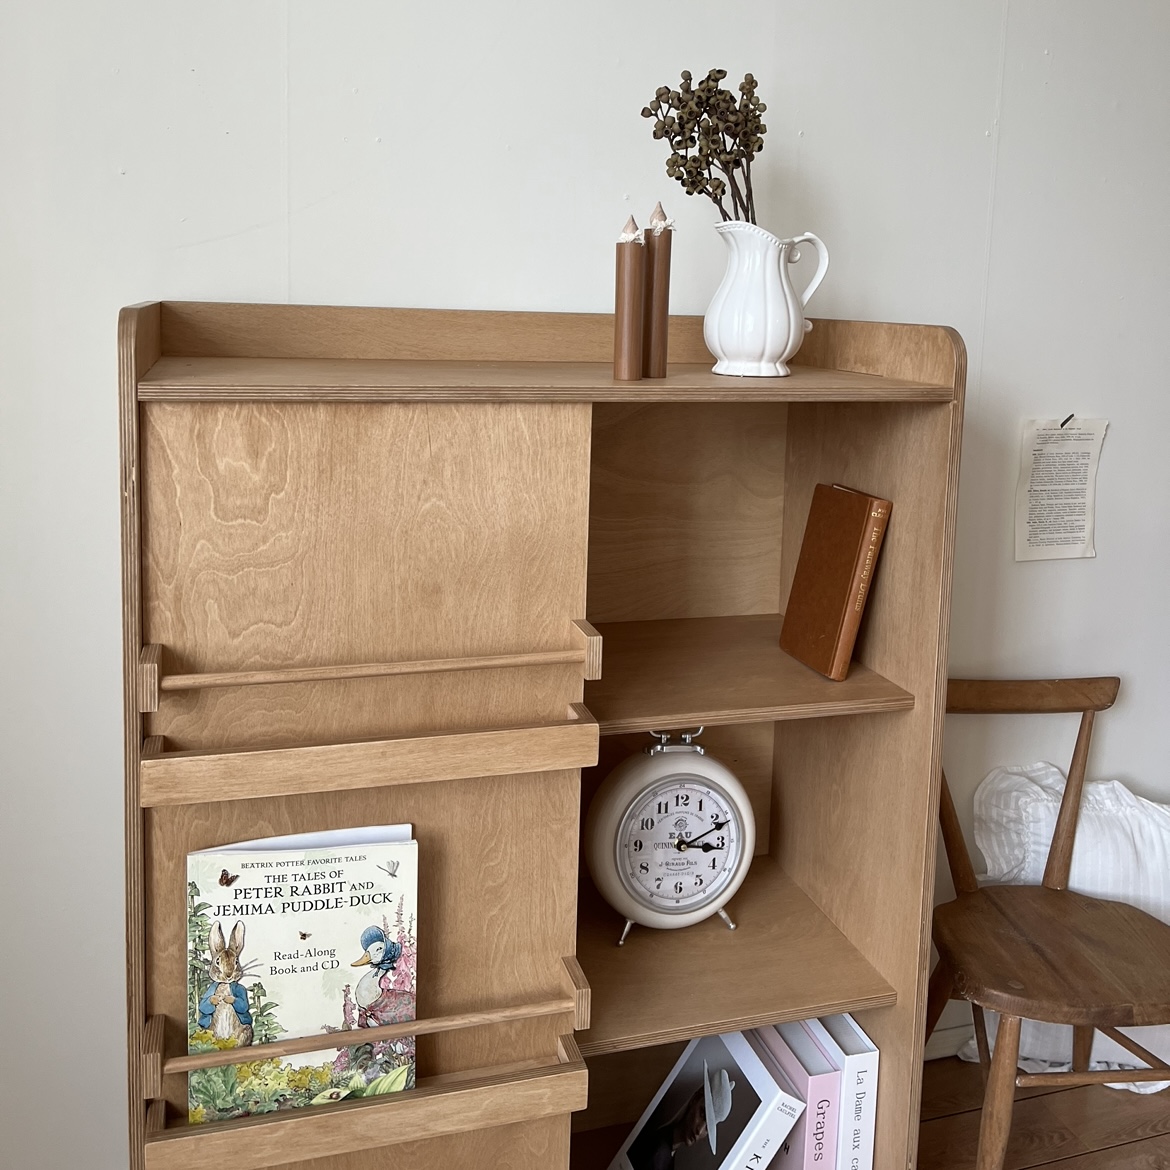 A bookshelf and magazine rack.